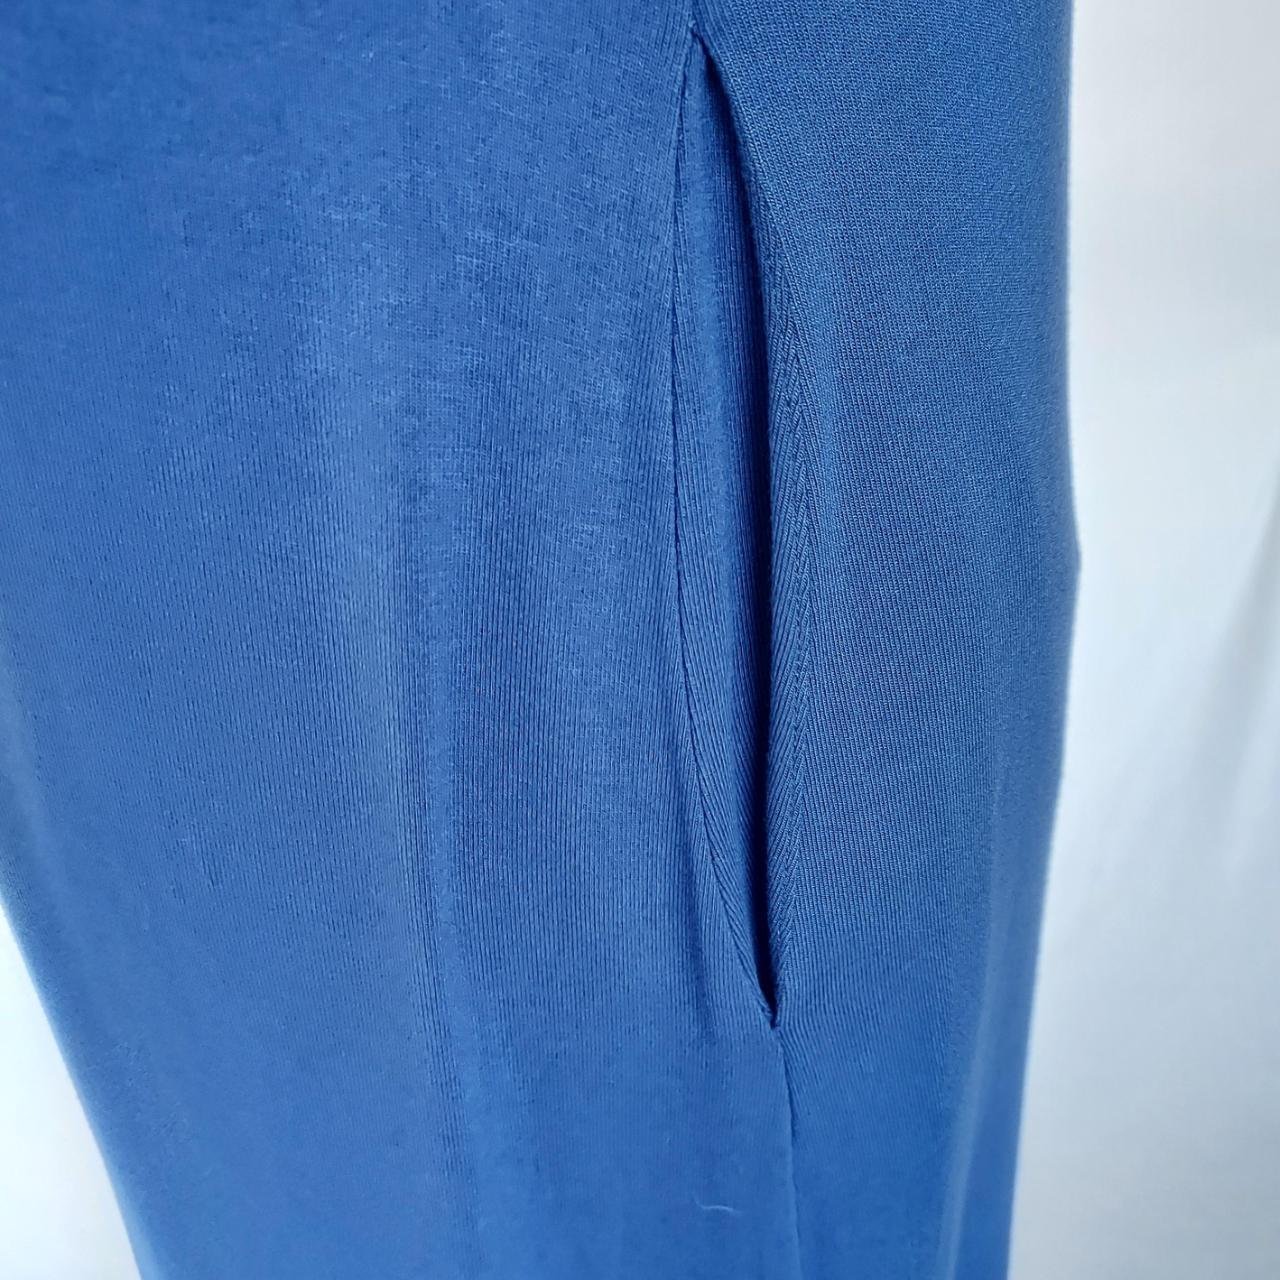 Venus Women’s Maxi Dress Blue Preloved and in... - Depop